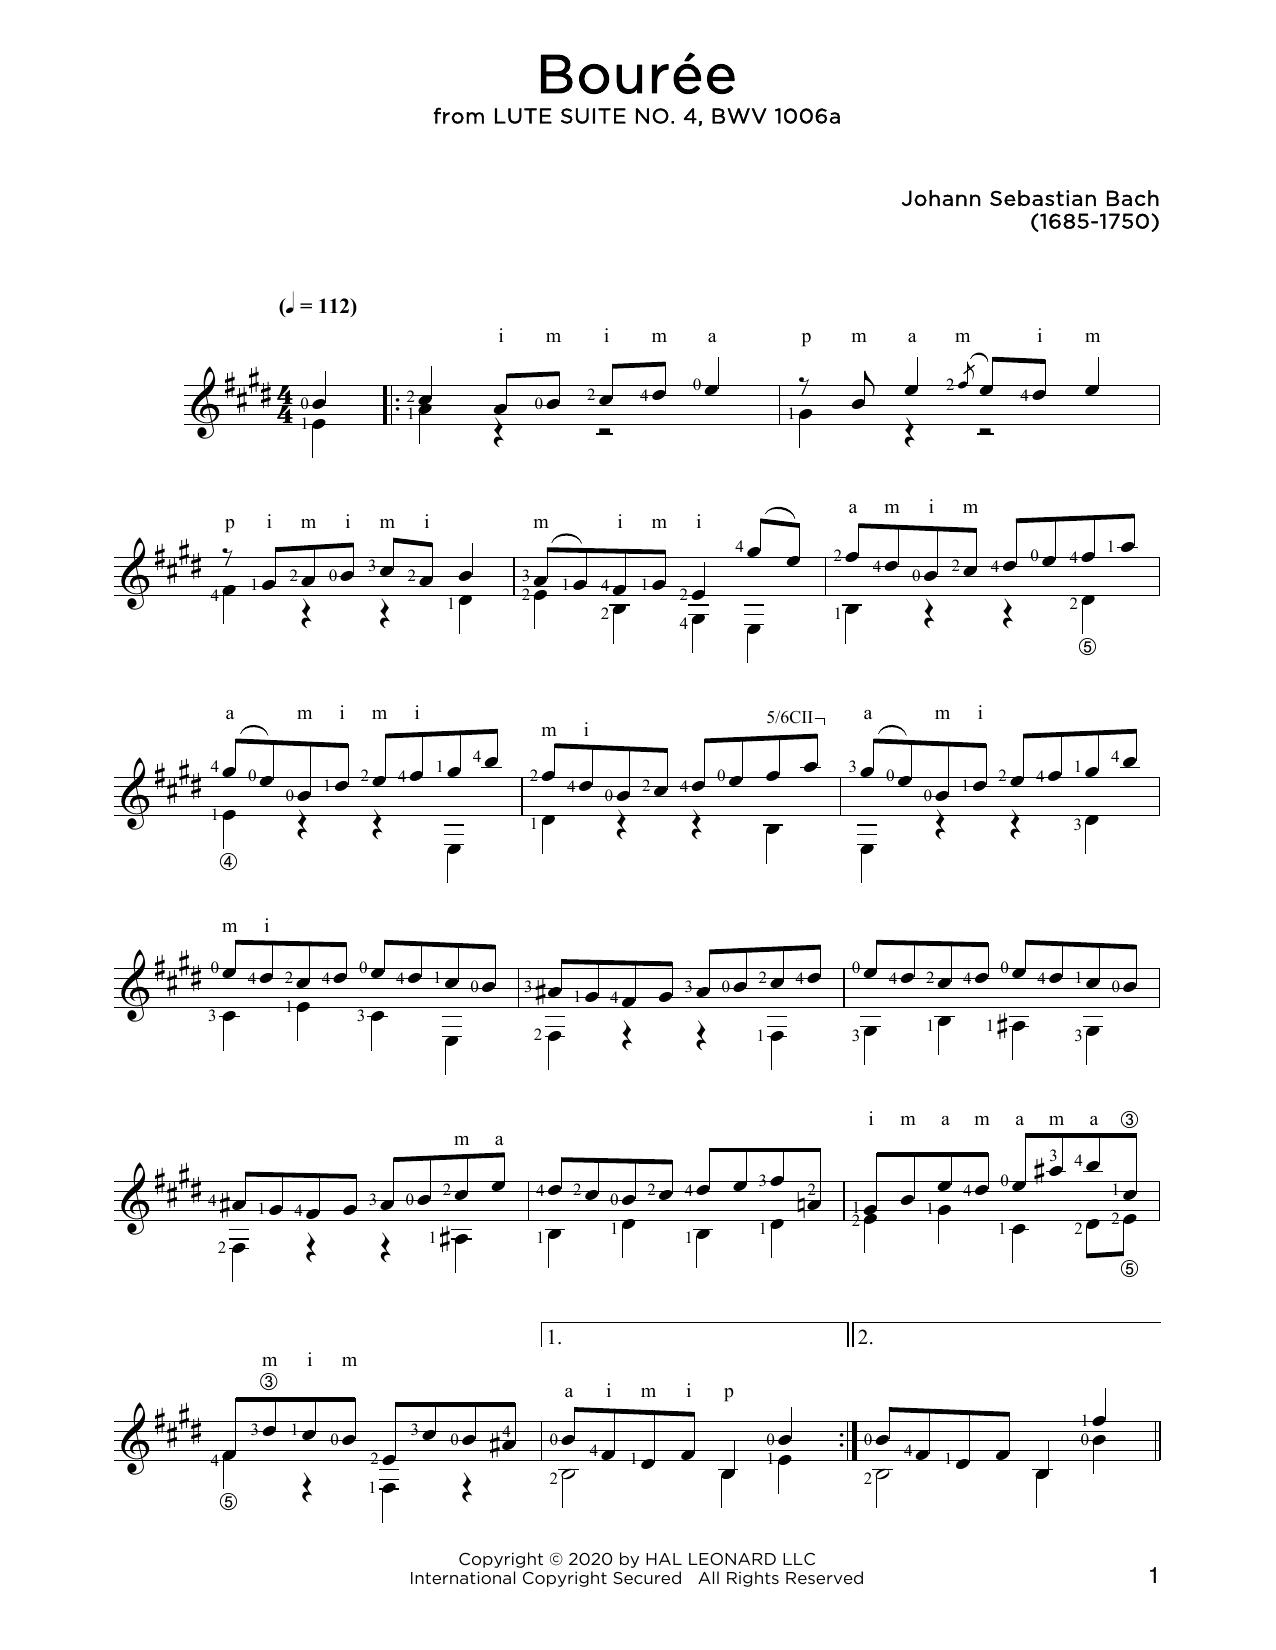 Johann Sebastian Bach Bouree sheet music notes and chords arranged for Solo Guitar